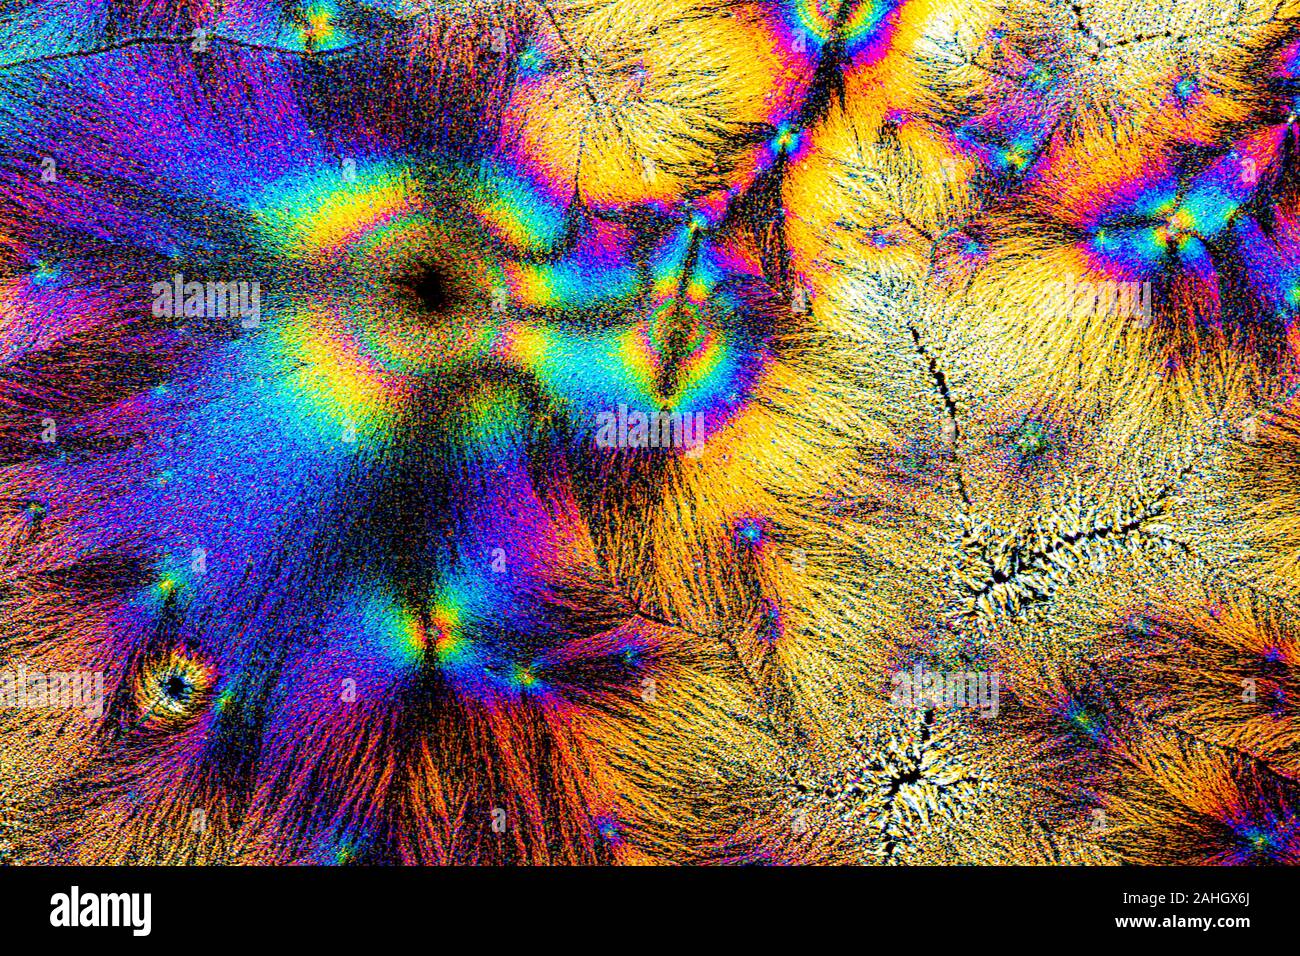 Extreme macro photograph of Vitamin C crystals Stock Photo